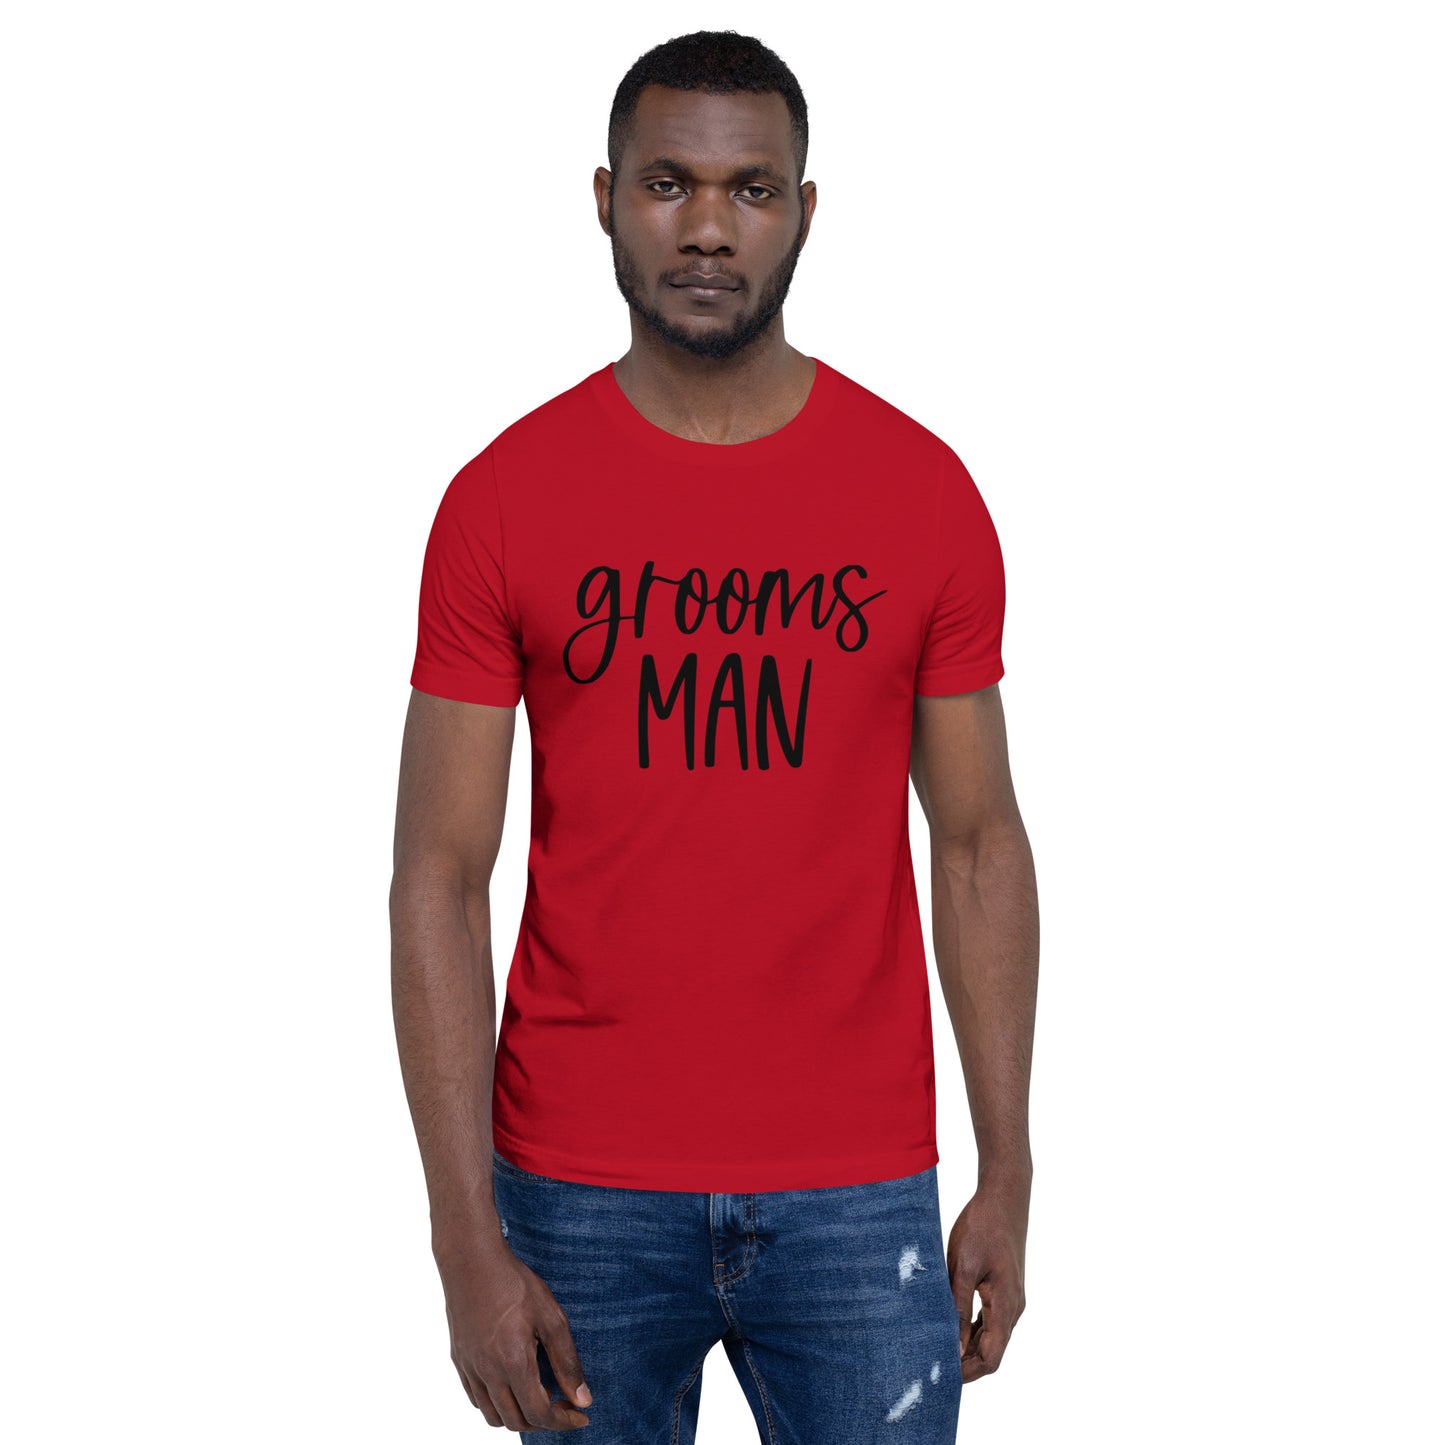 "Grooms Man" Customizable Unisex T-shirt (Black Print)